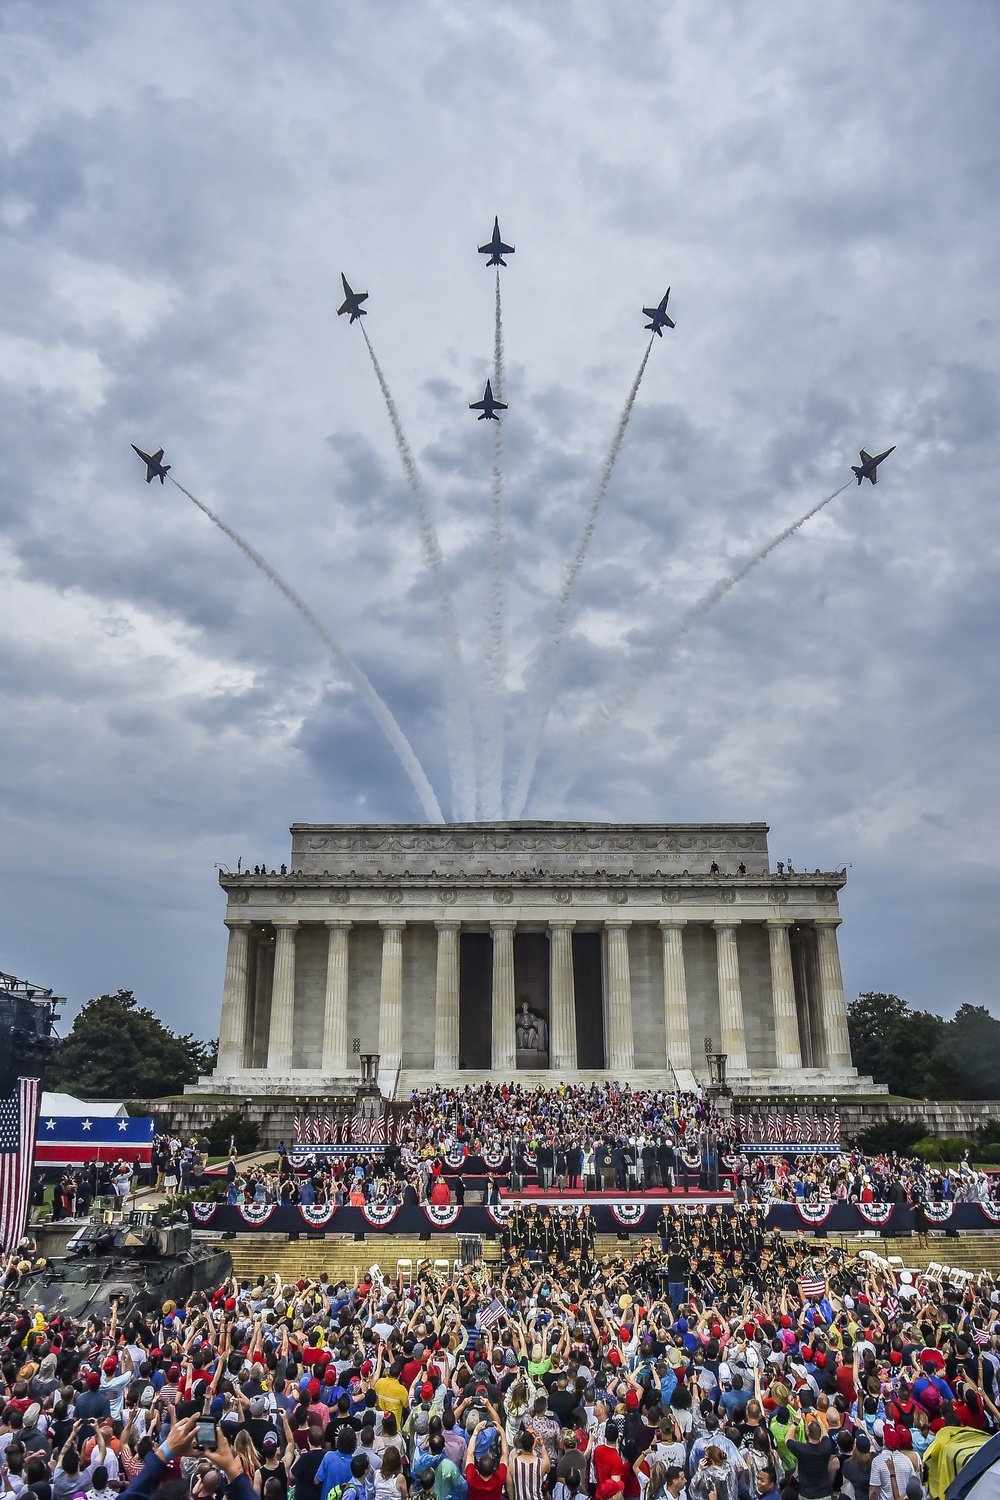 Blue Angels Soar Over Fourth of July Celebration in DC